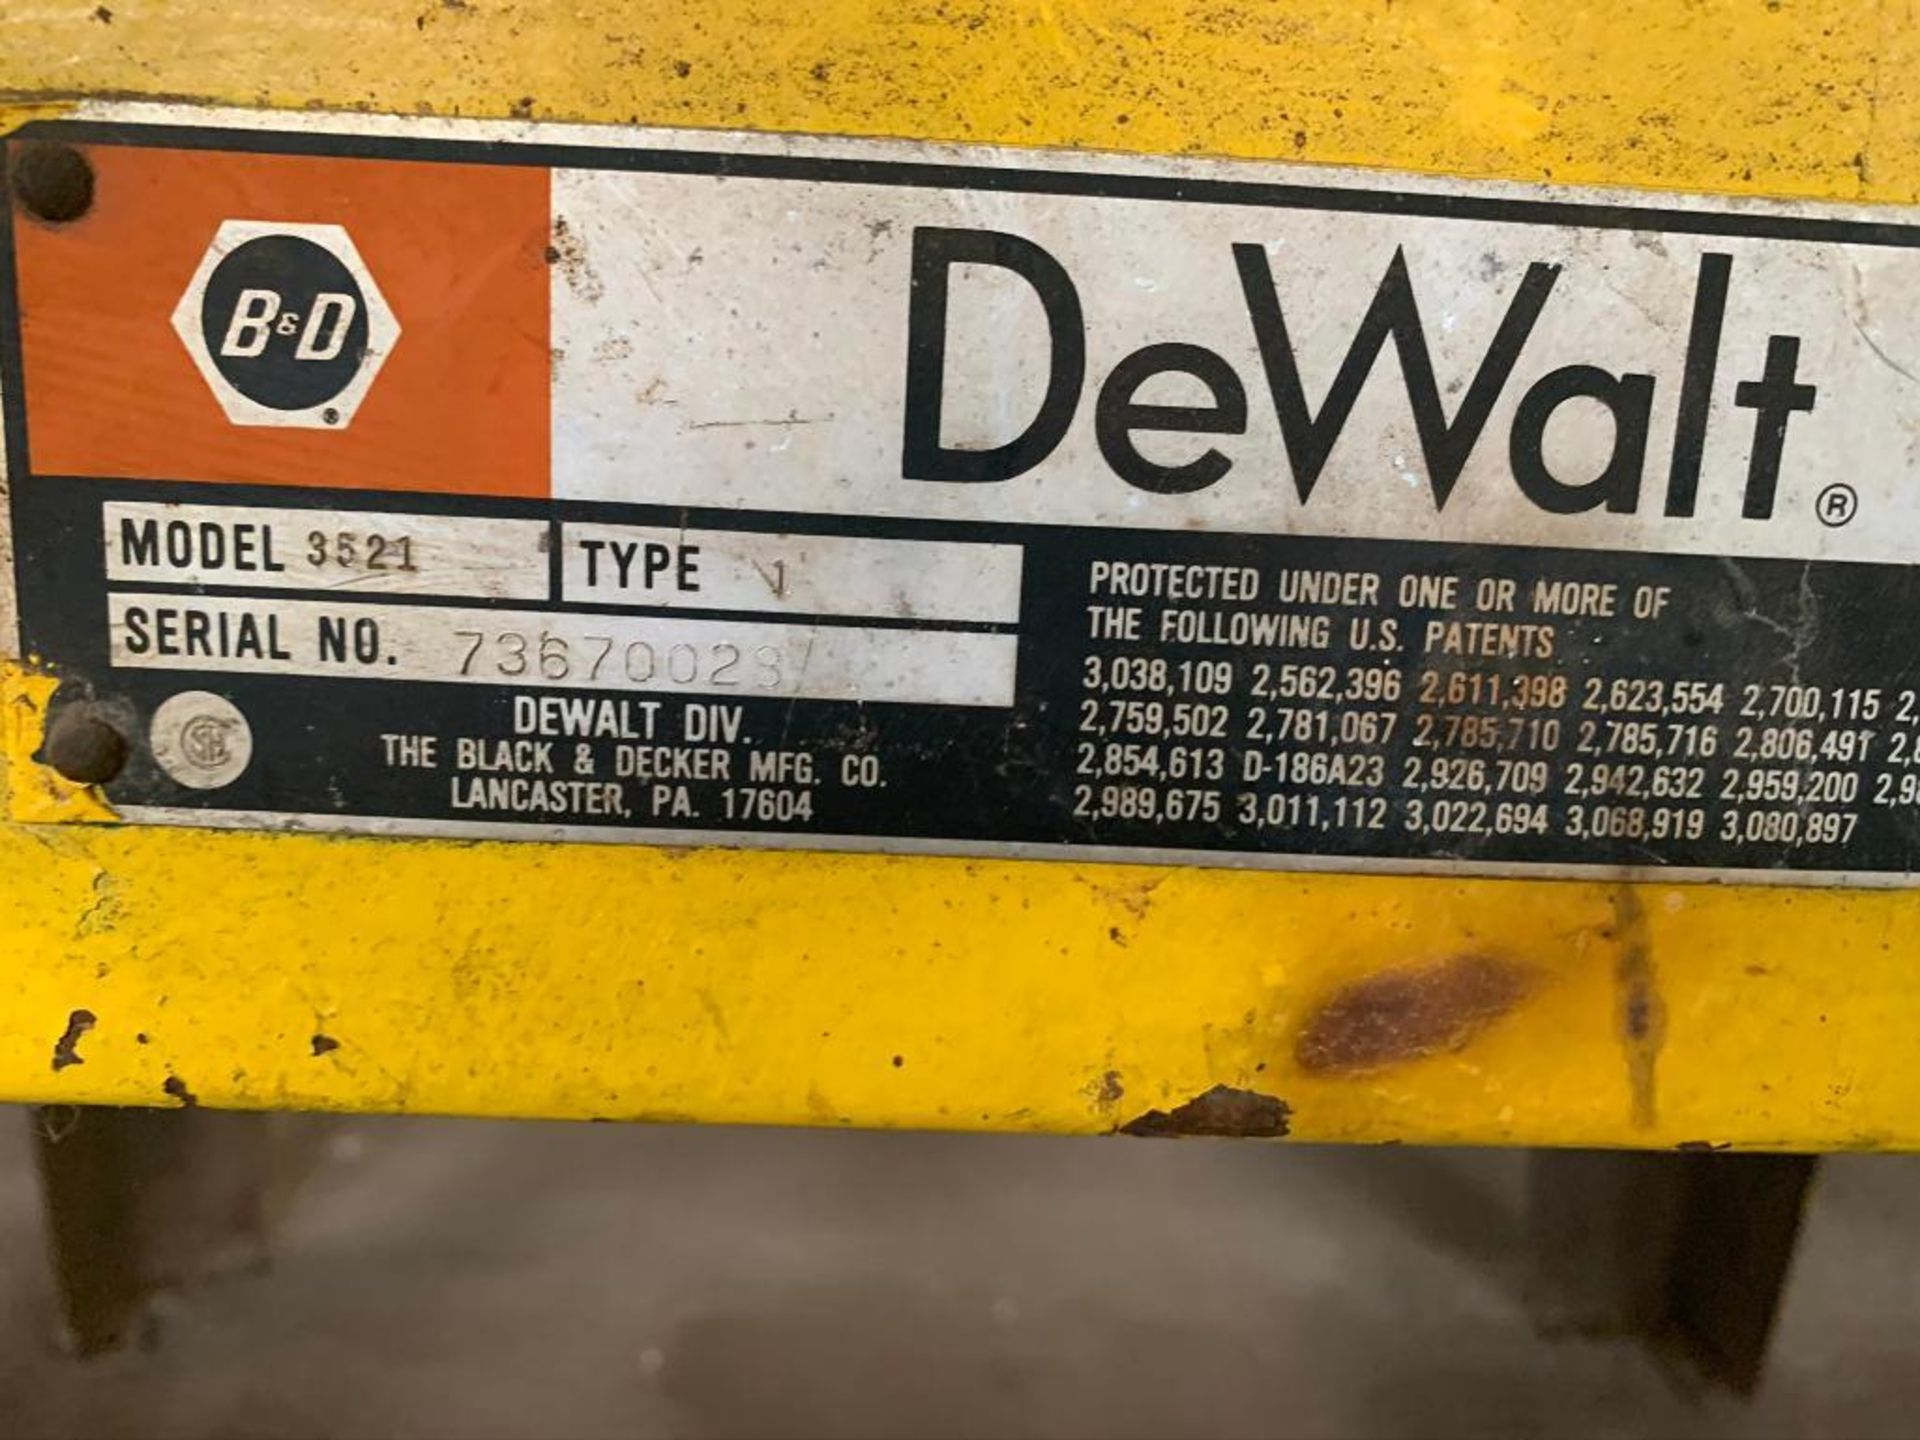 Dewalt Cross Cut Saw Model 3521, S/N 73670028 (disassembled) - Image 3 of 3